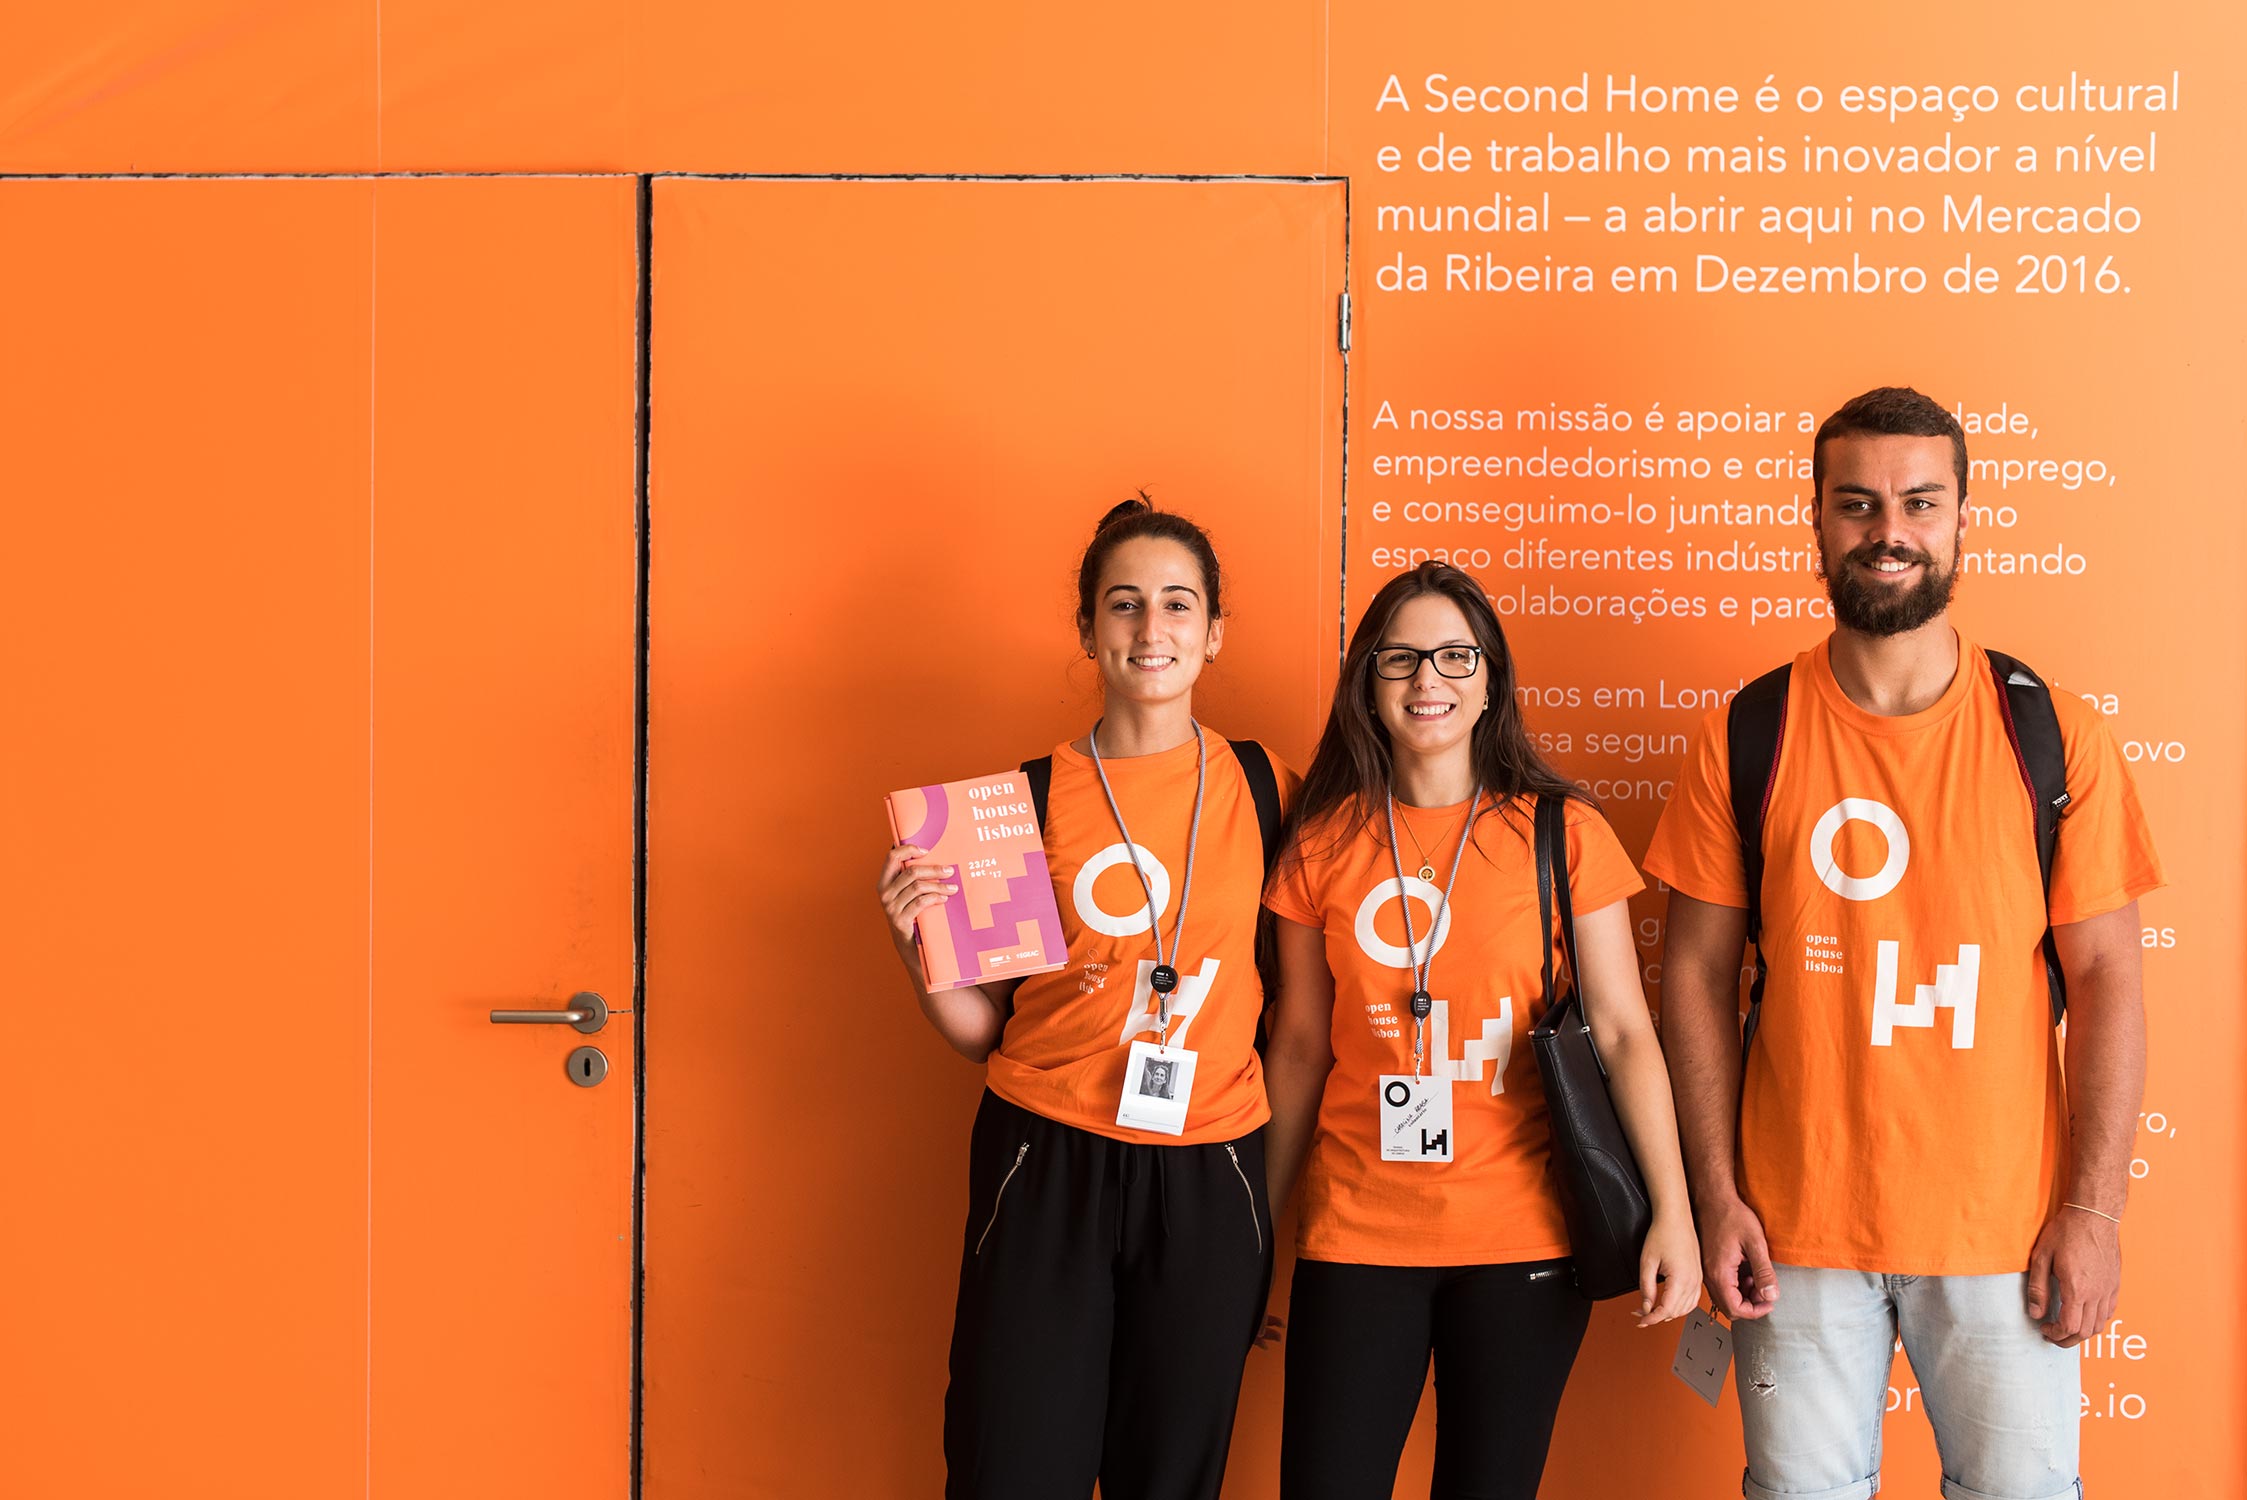 Open House Lisbon volunteers. Photo by Hugo David. Courtesy of Lisbon Architecture Triennale